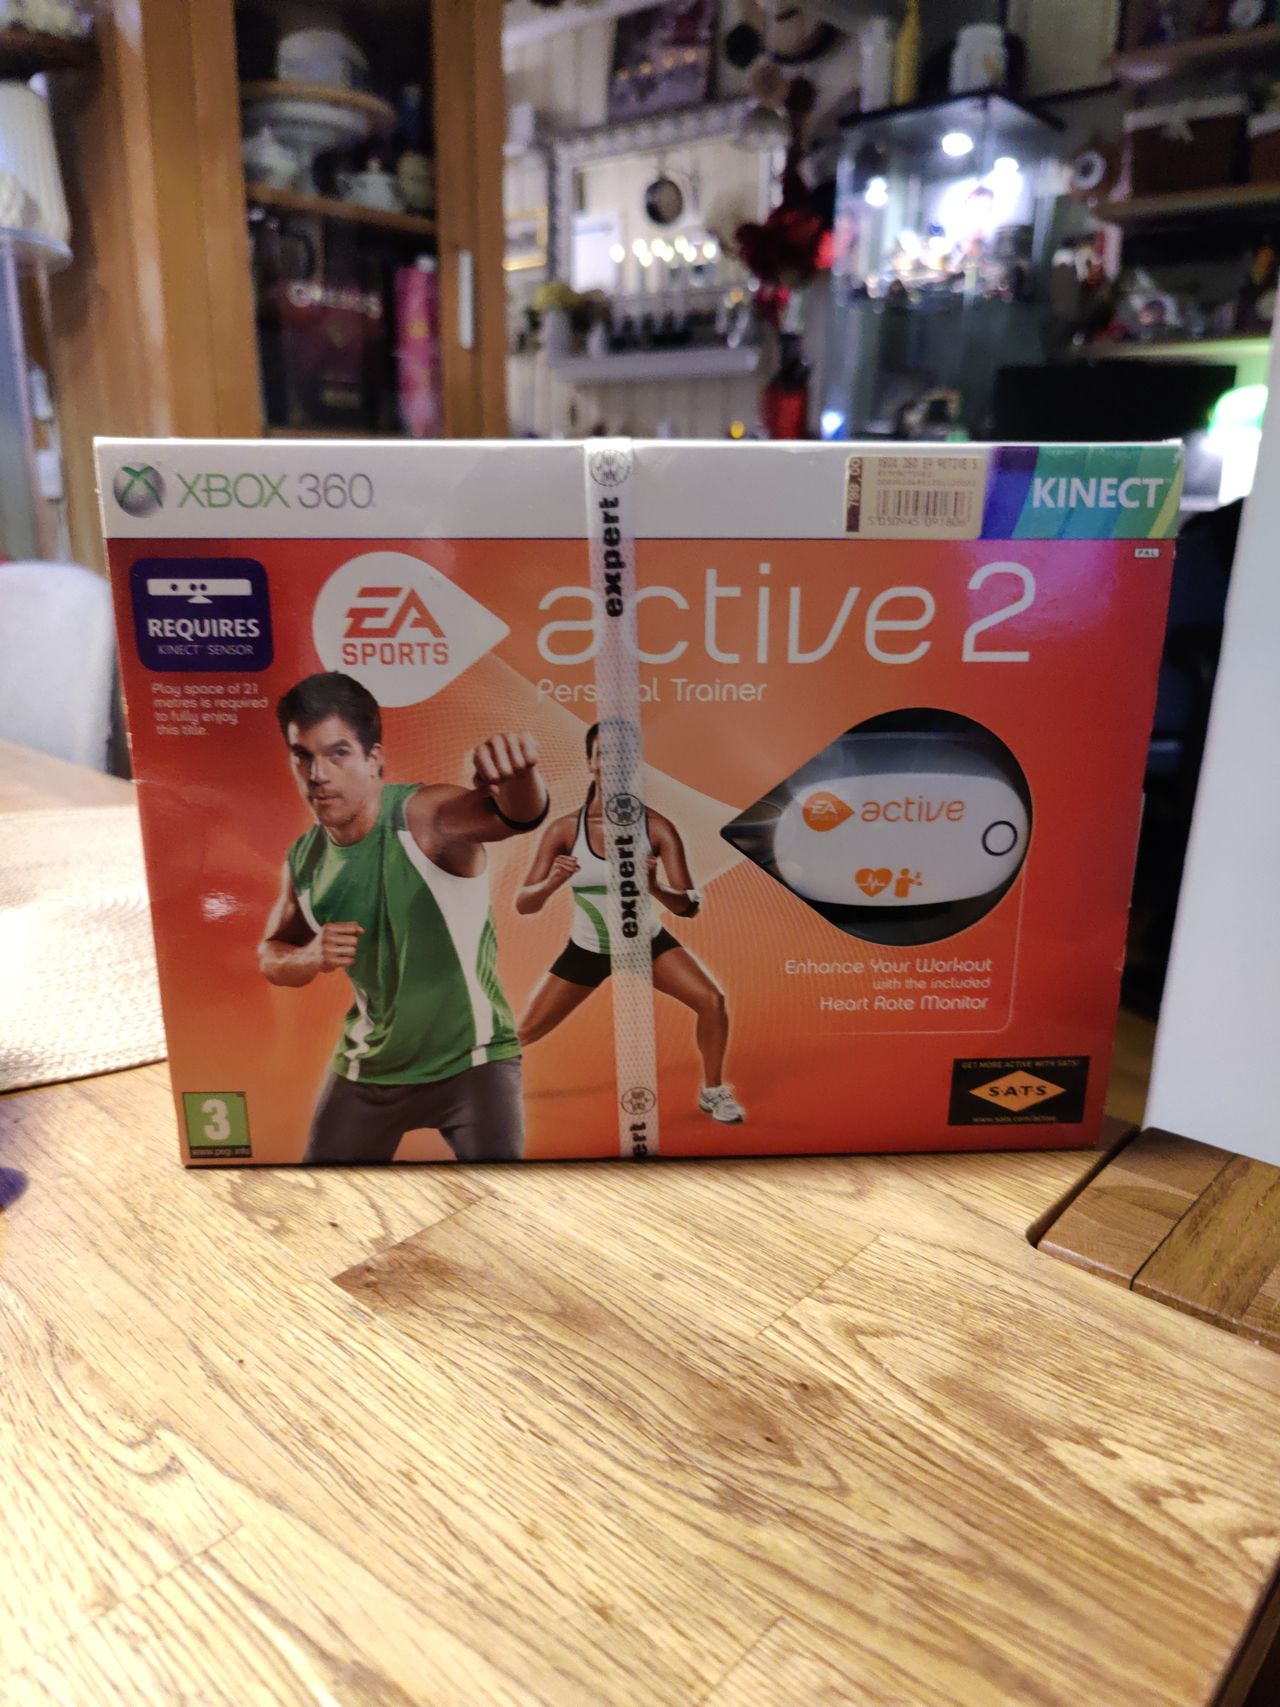 Jogo Ea Sports Active 2 Kinect - Xbox 360 - Original